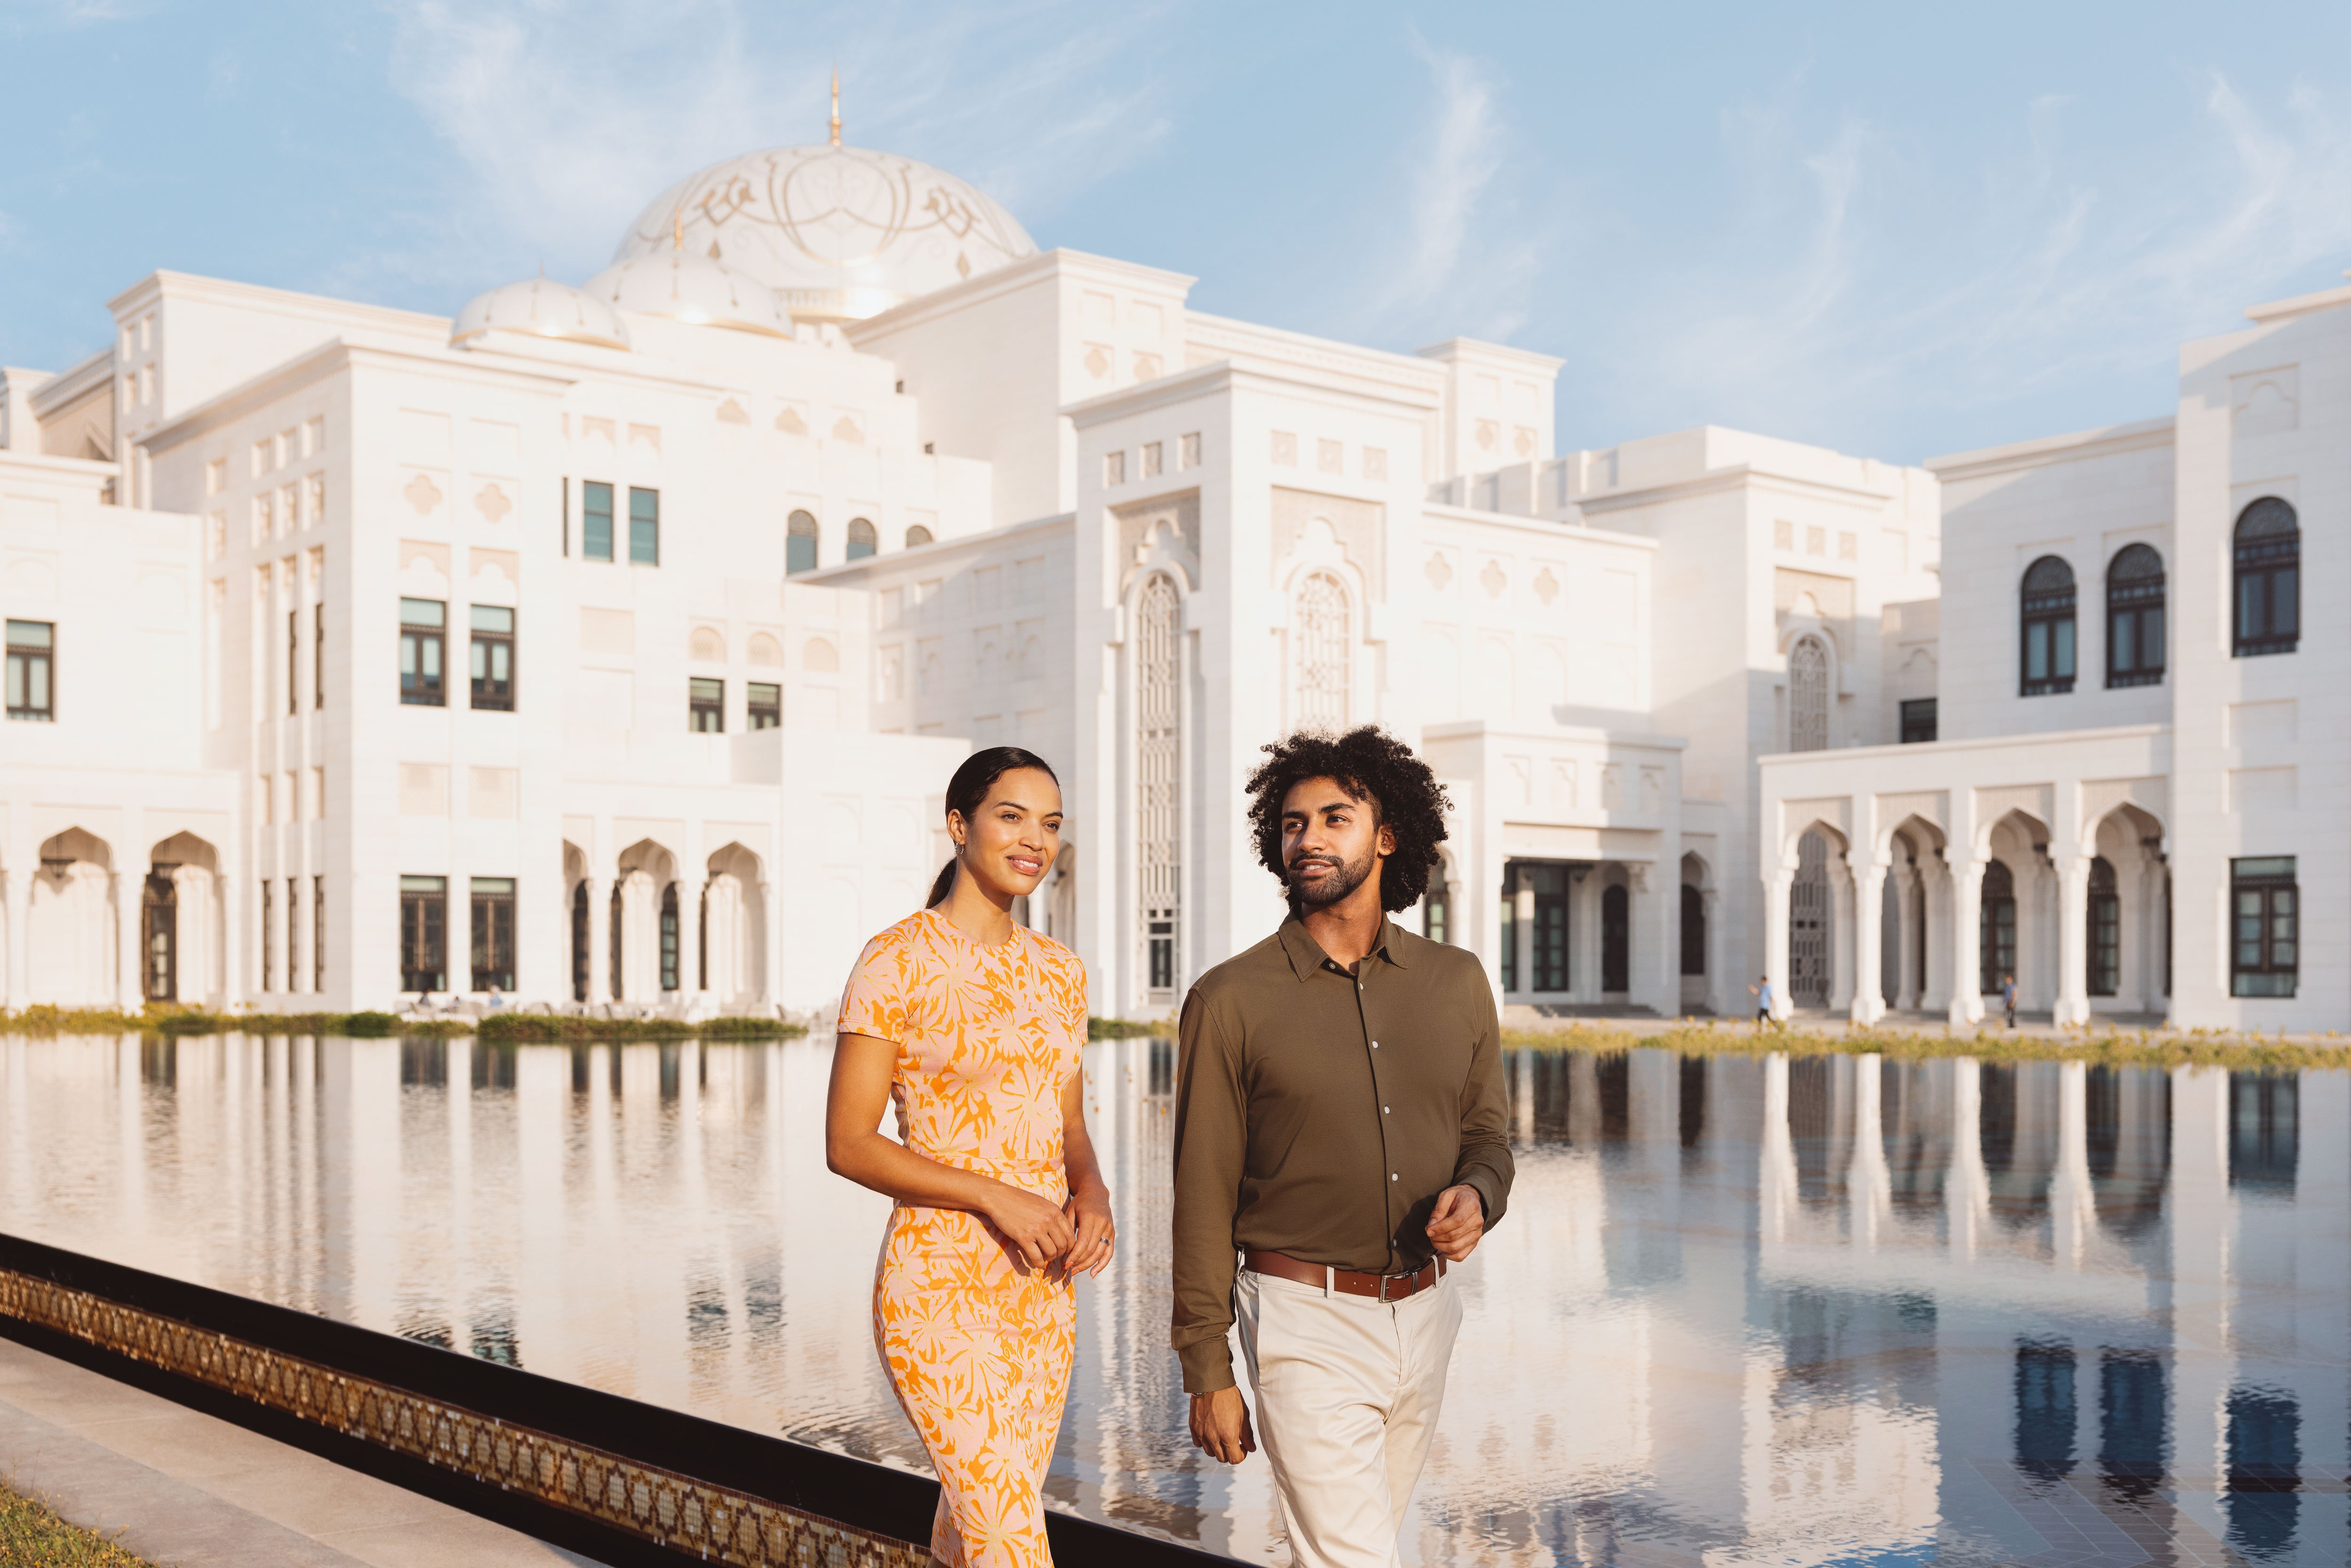 Couple walking outside by the water at Qasr-al-watan palace